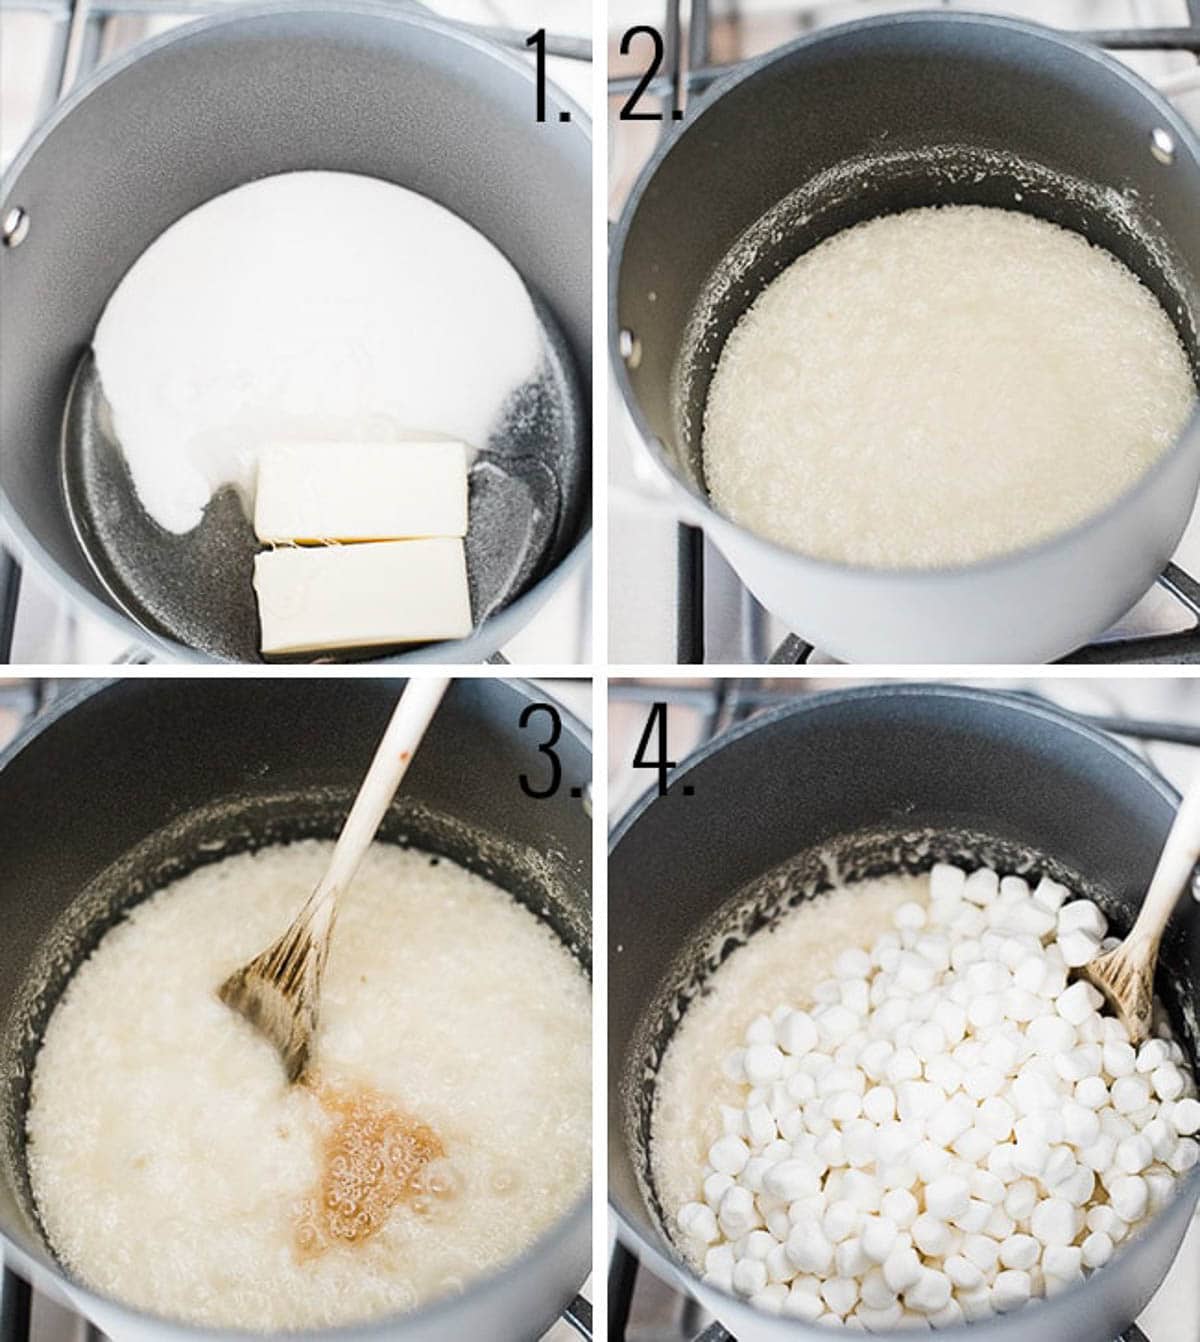 How to make marshmallow popcorn.